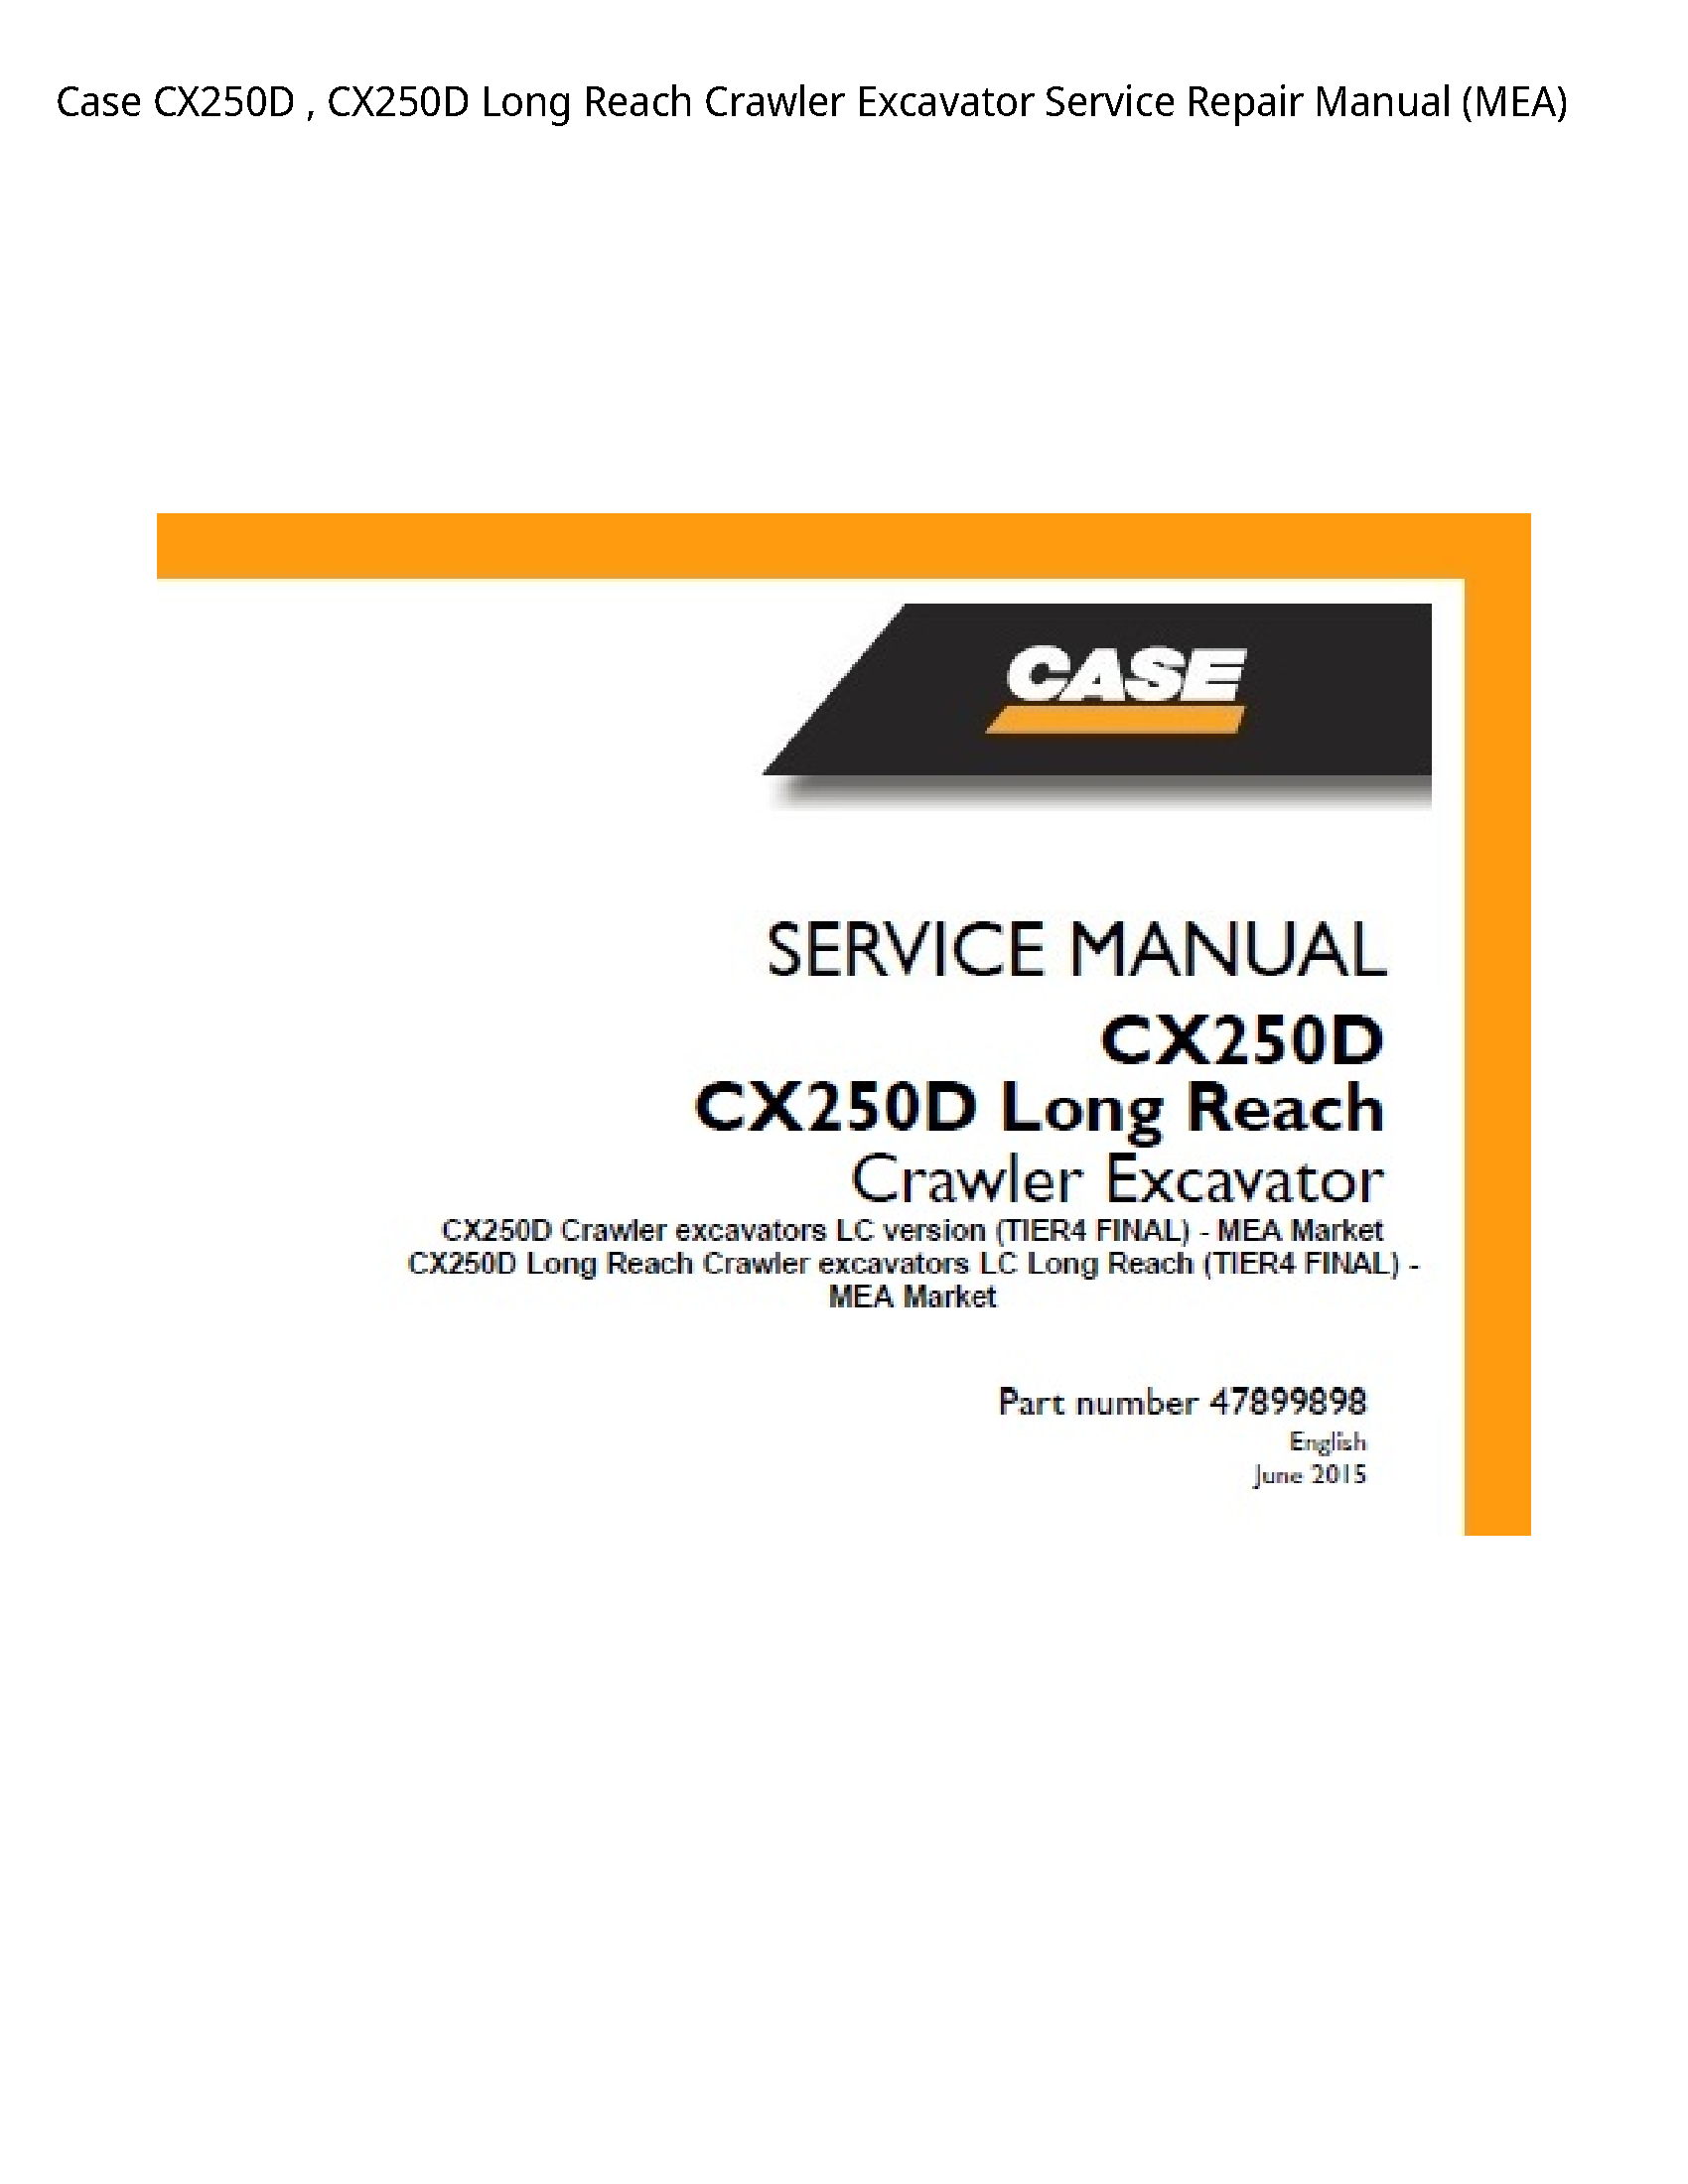 Case/Case IH CX250D Long Reach Crawler Excavator manual